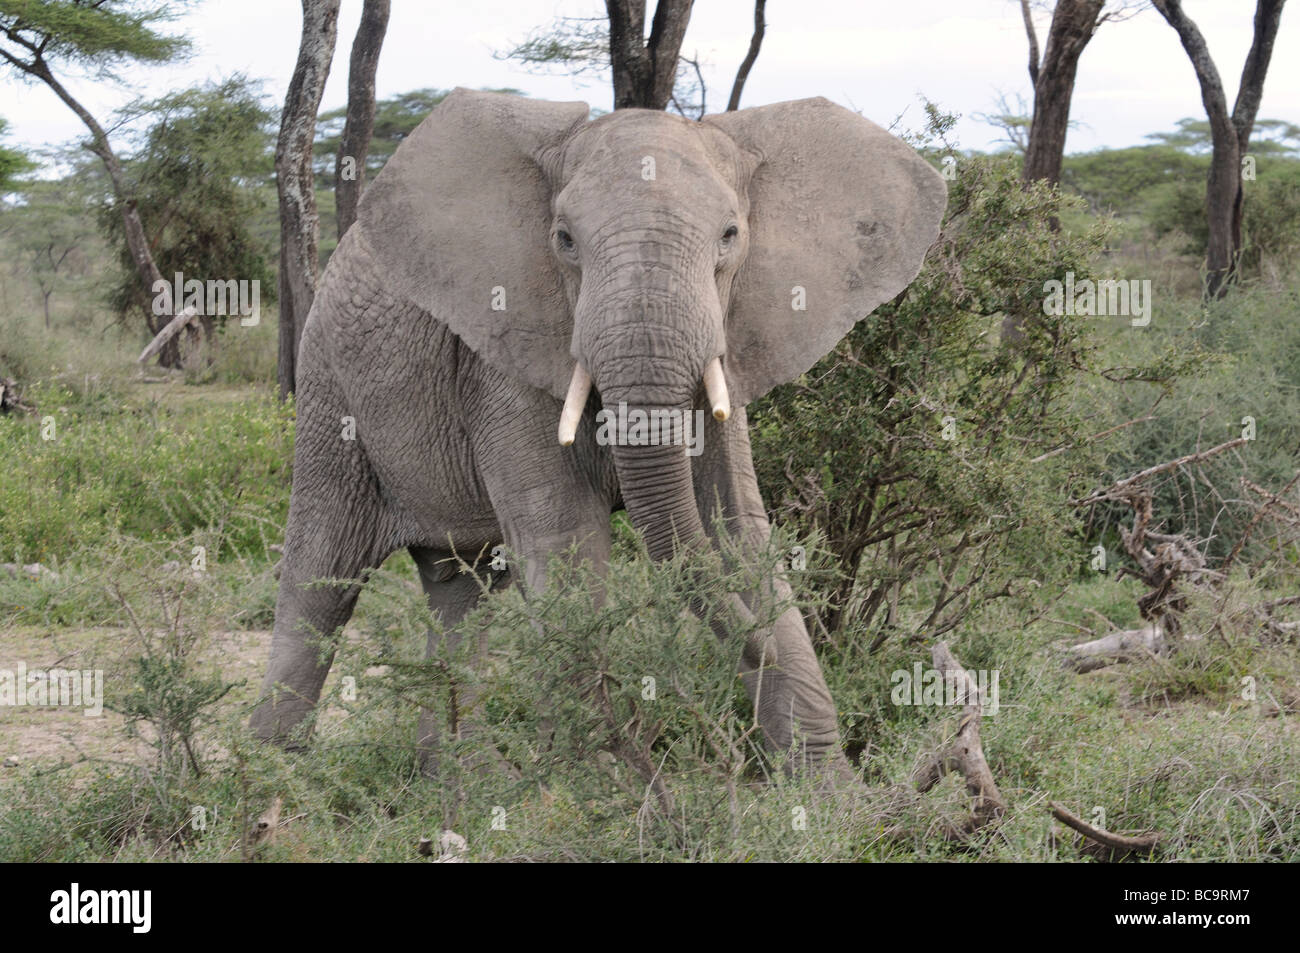 Stock photo of an elephant displaying an aggressive posture, Ndutu, Tanzania, 2009. Stock Photo